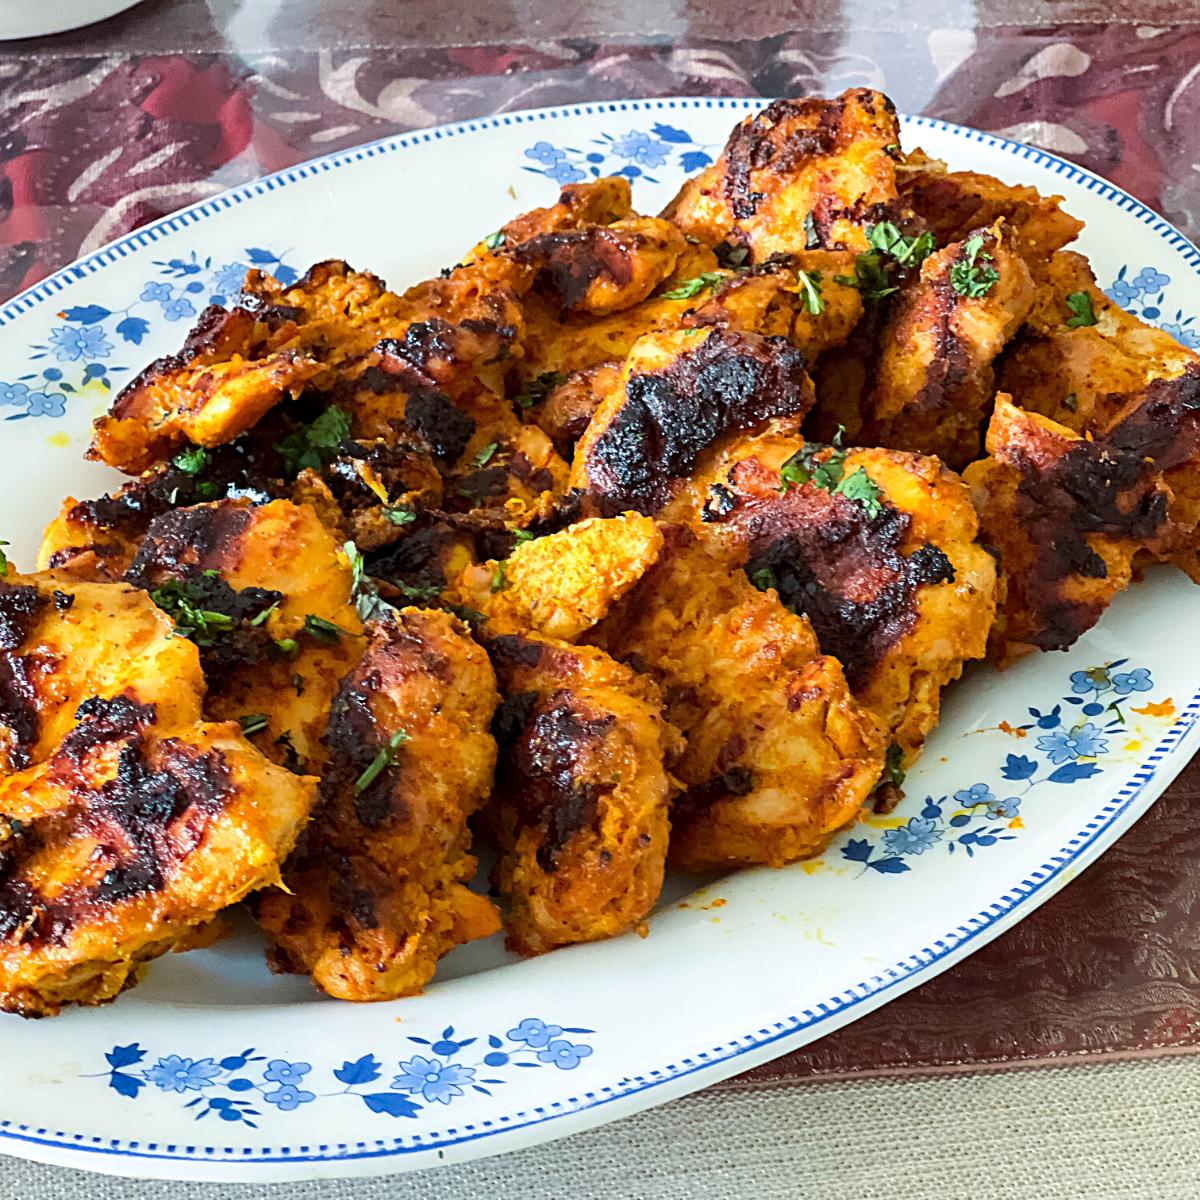 A platter with tandoori chicken.